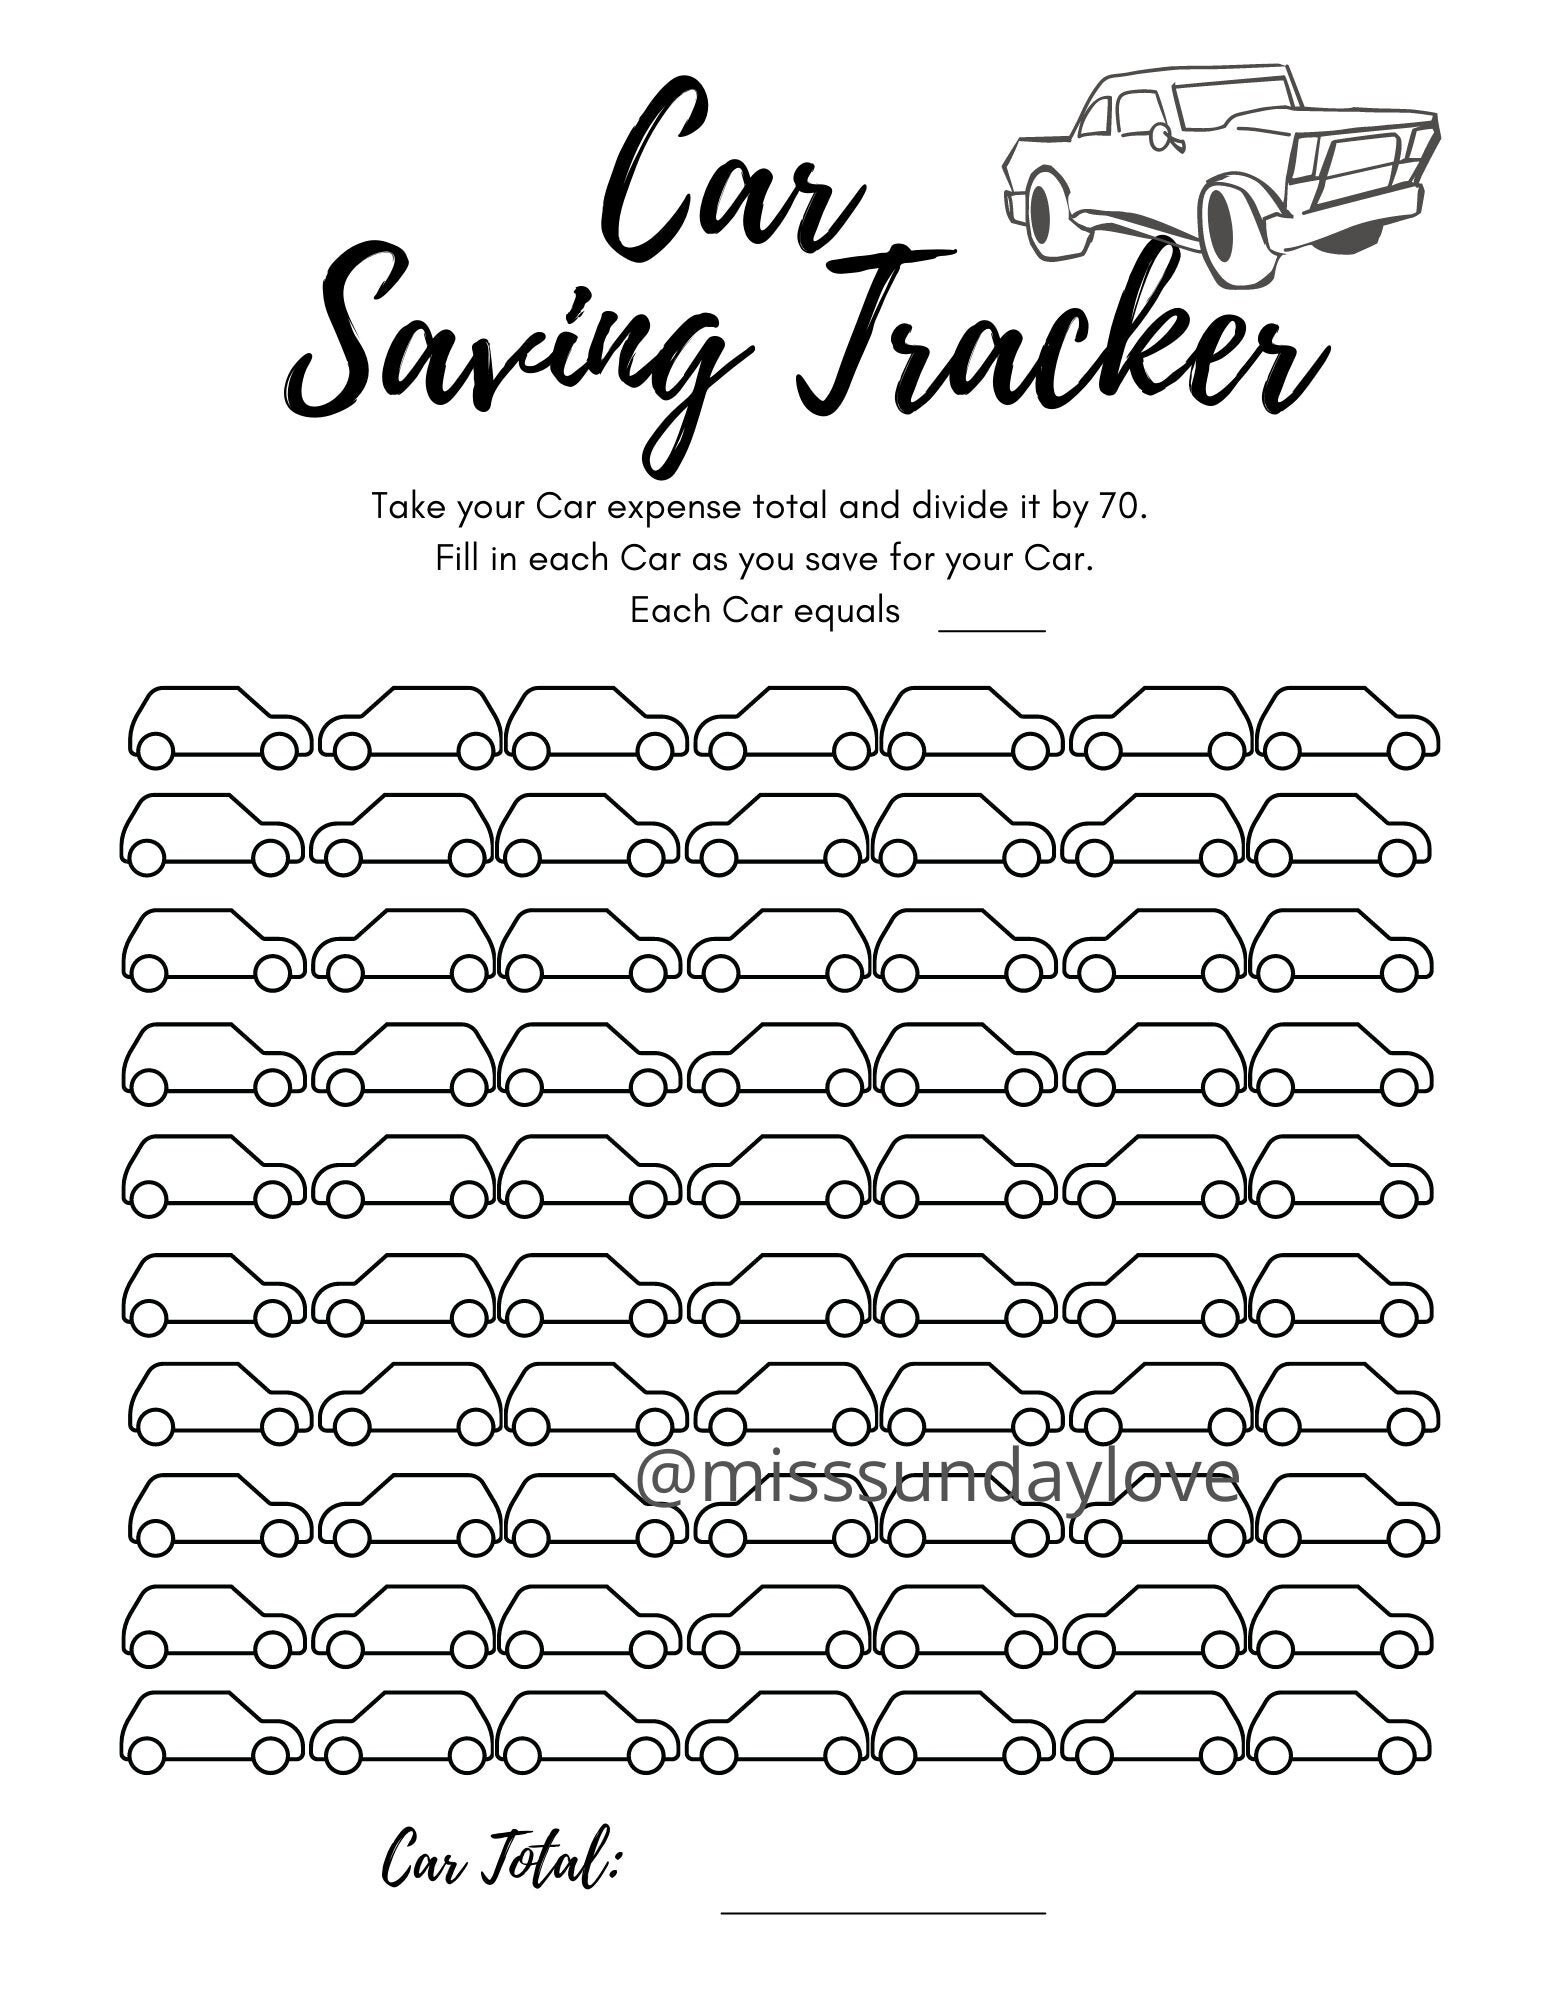 car-savings-tracker-etsy